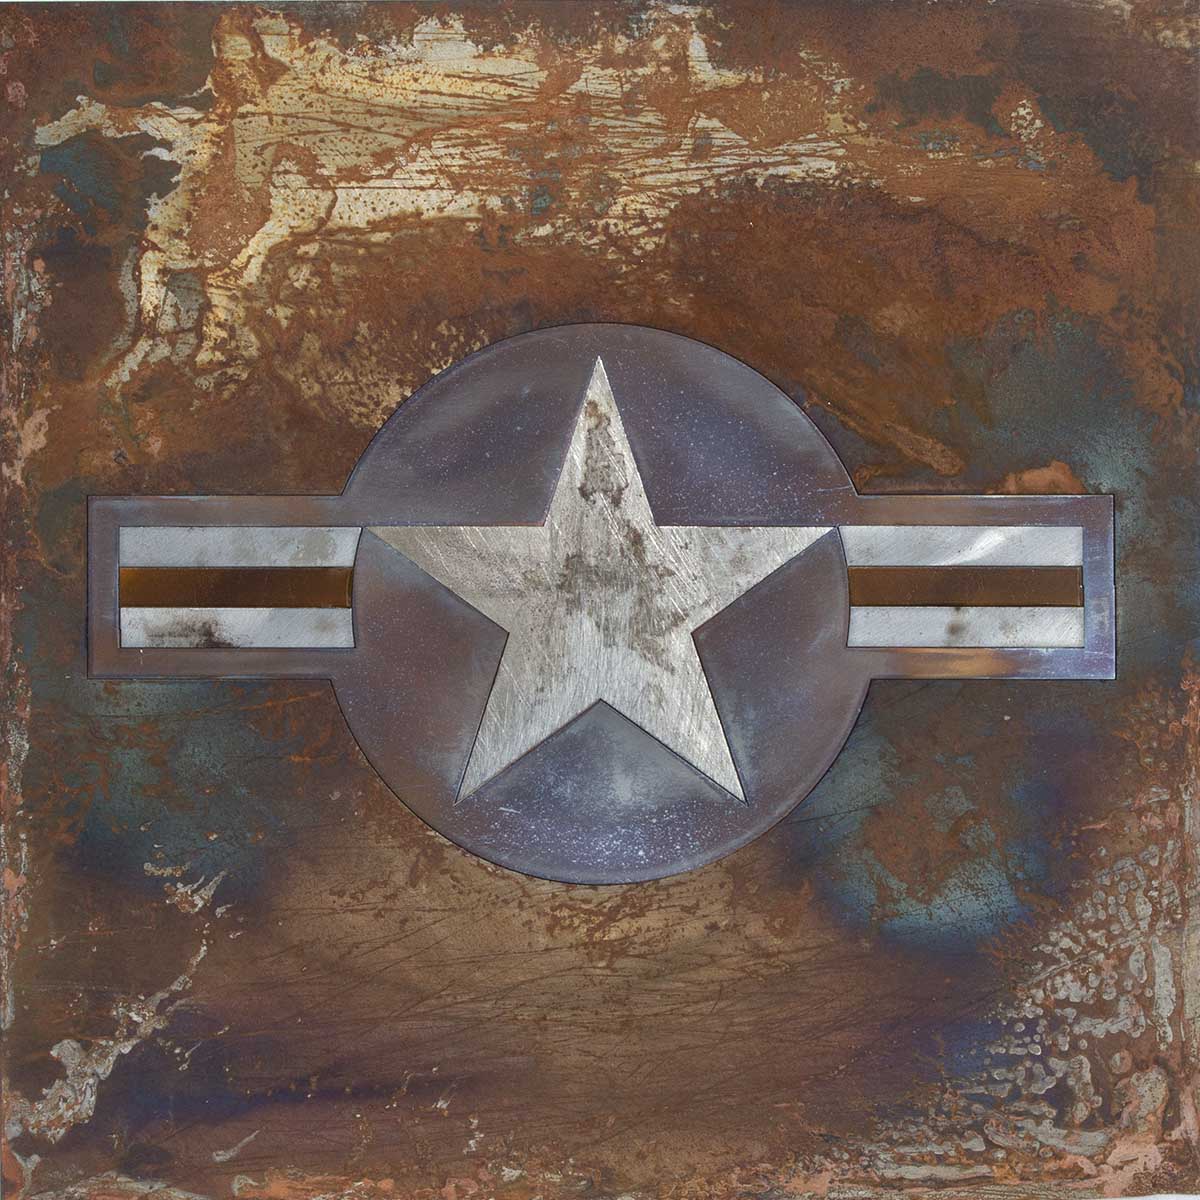 United States Air Force steel roundel artwork.